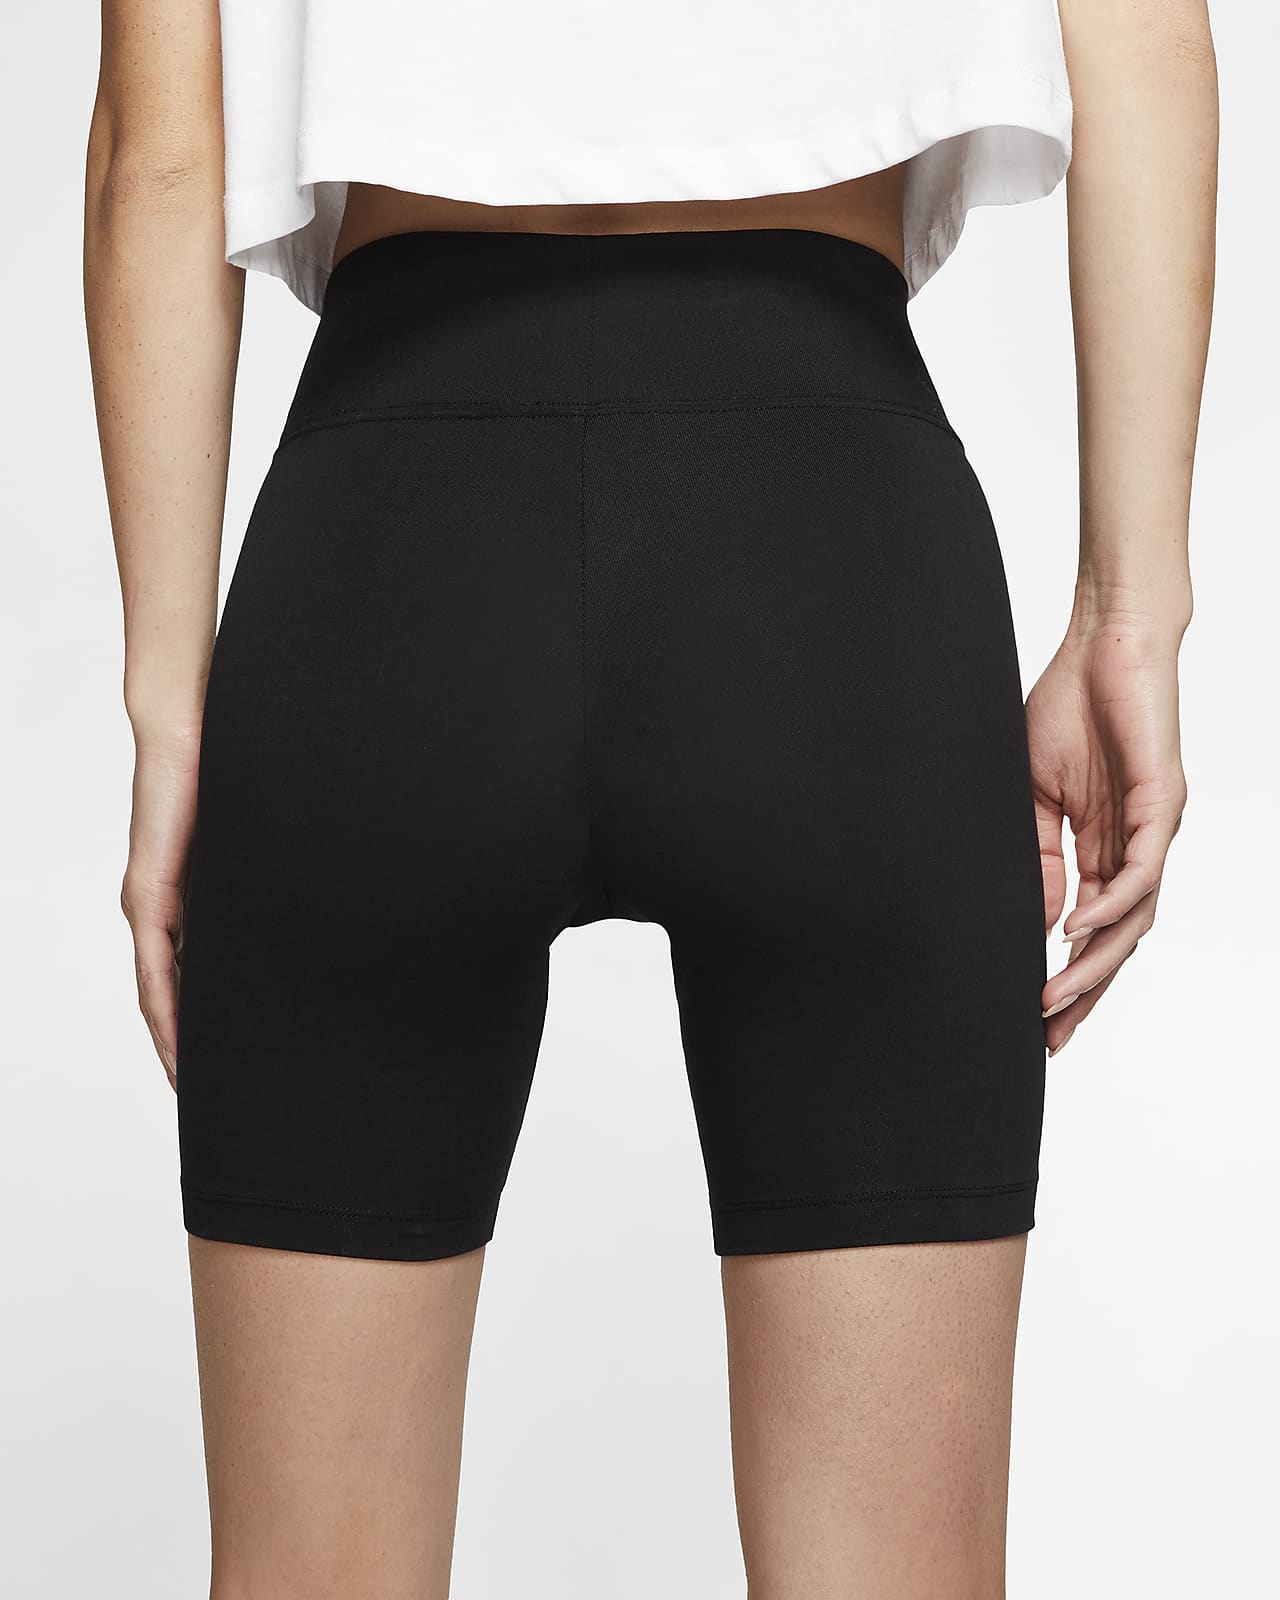 Nike Sportswear Leg-A-See Women's Bike Shorts.